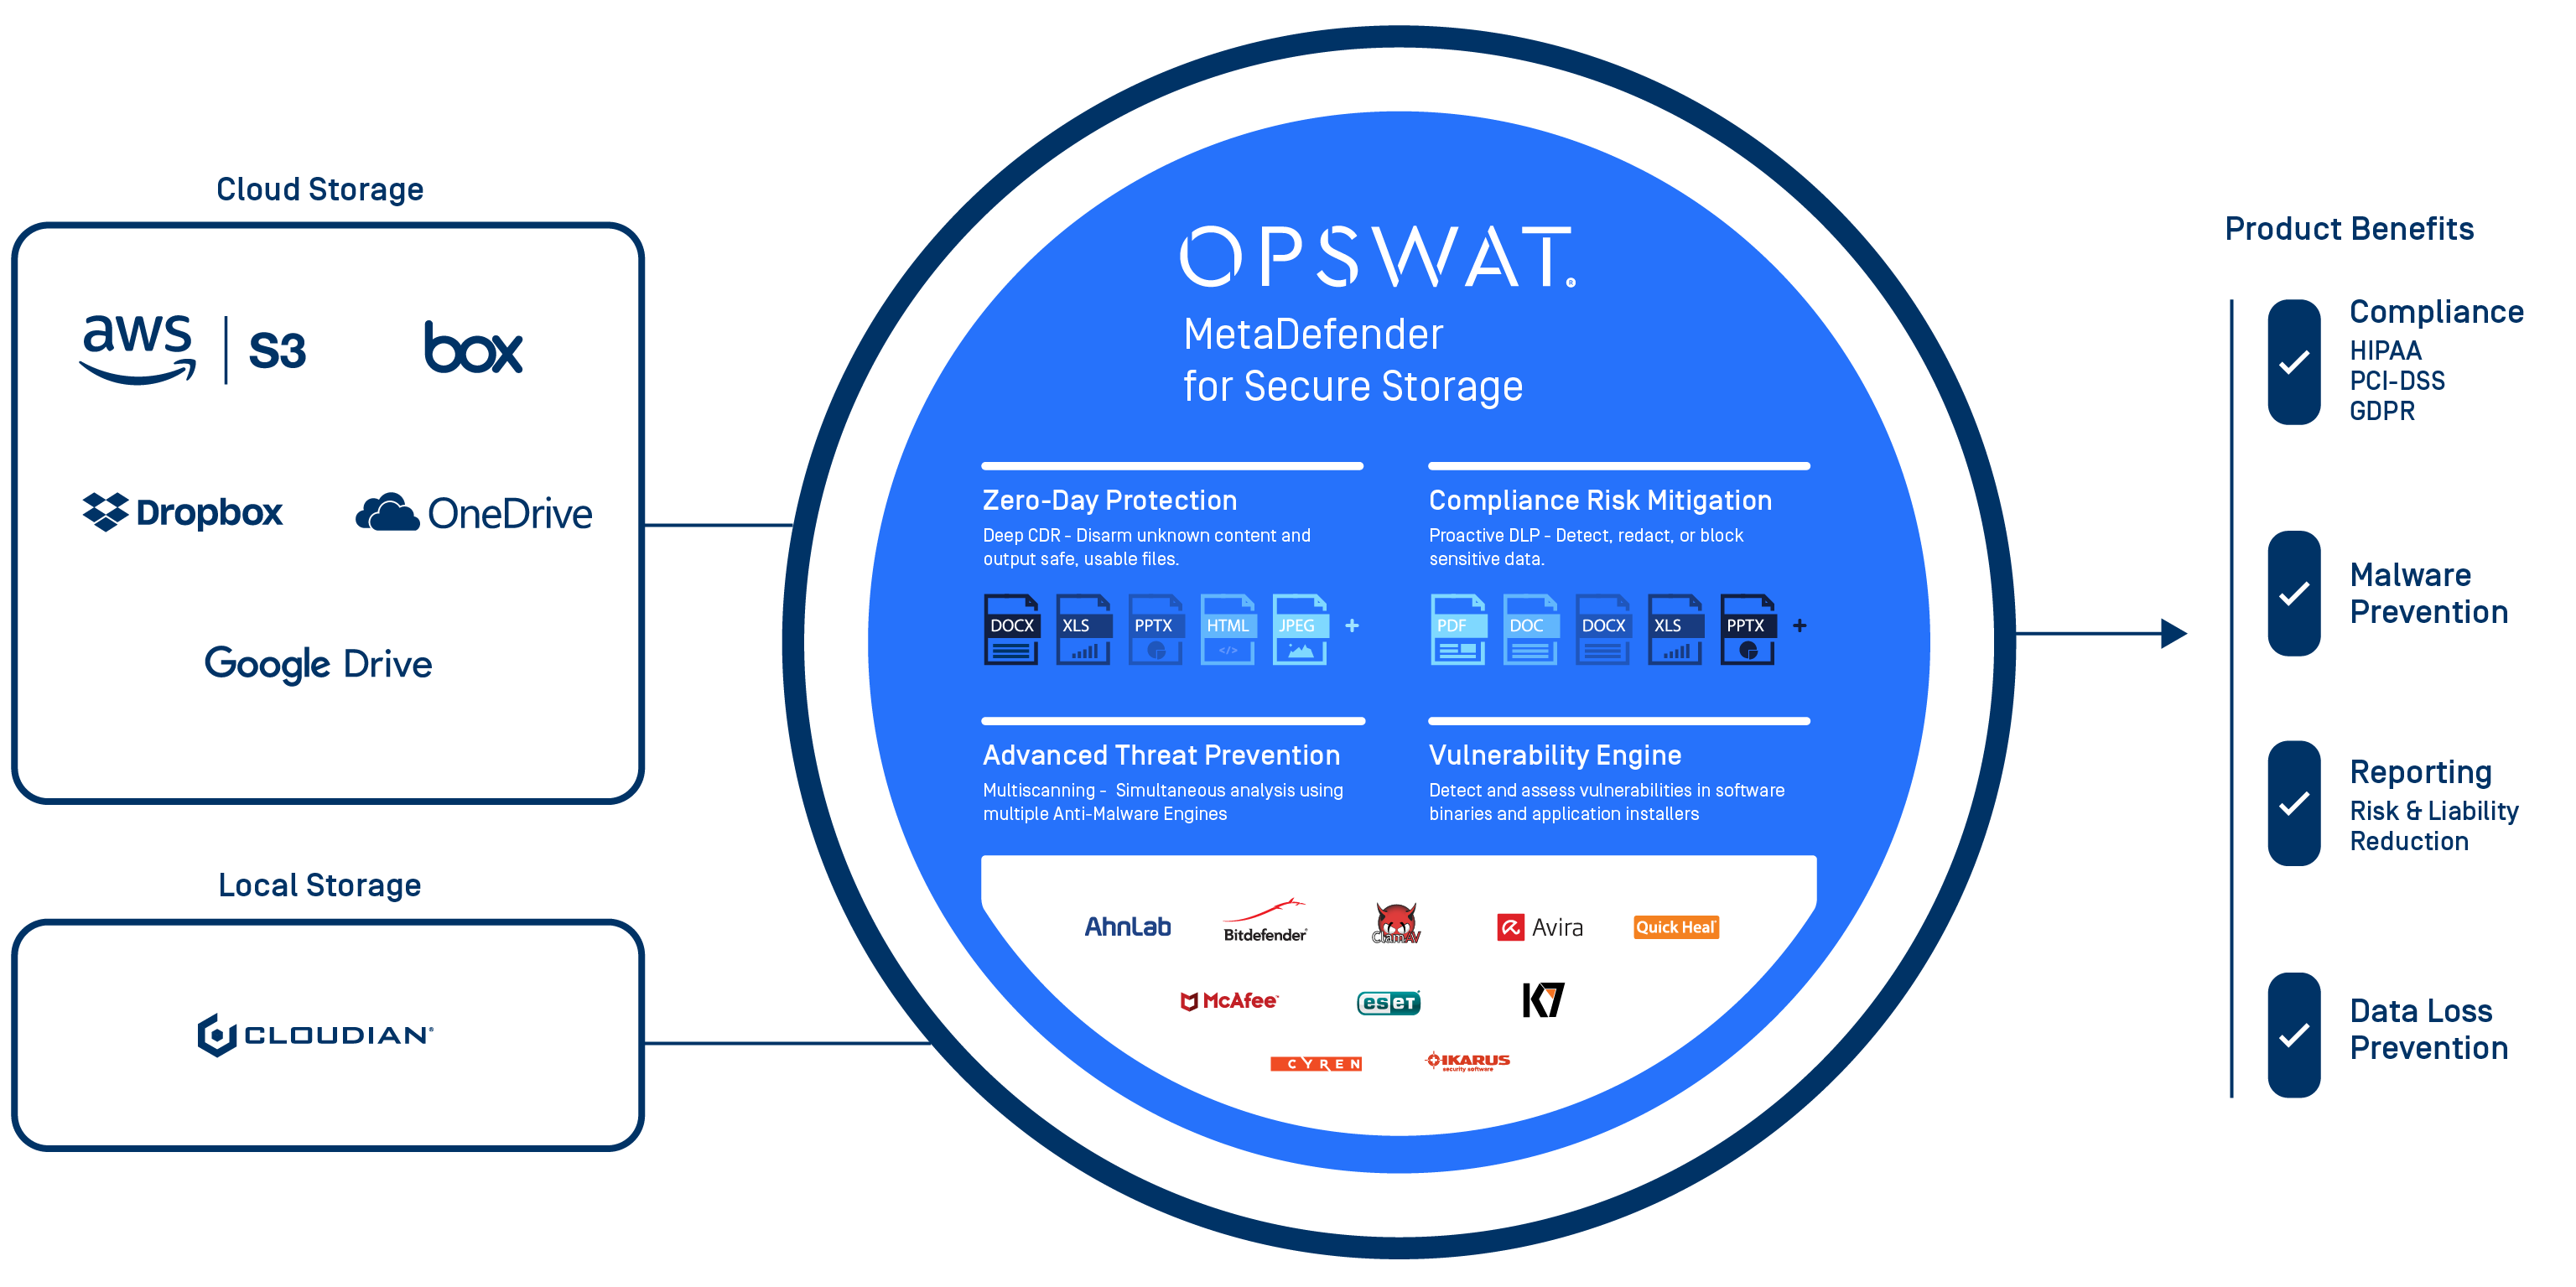 Új OPSWAT termék: MetaDefender for Secure Storage